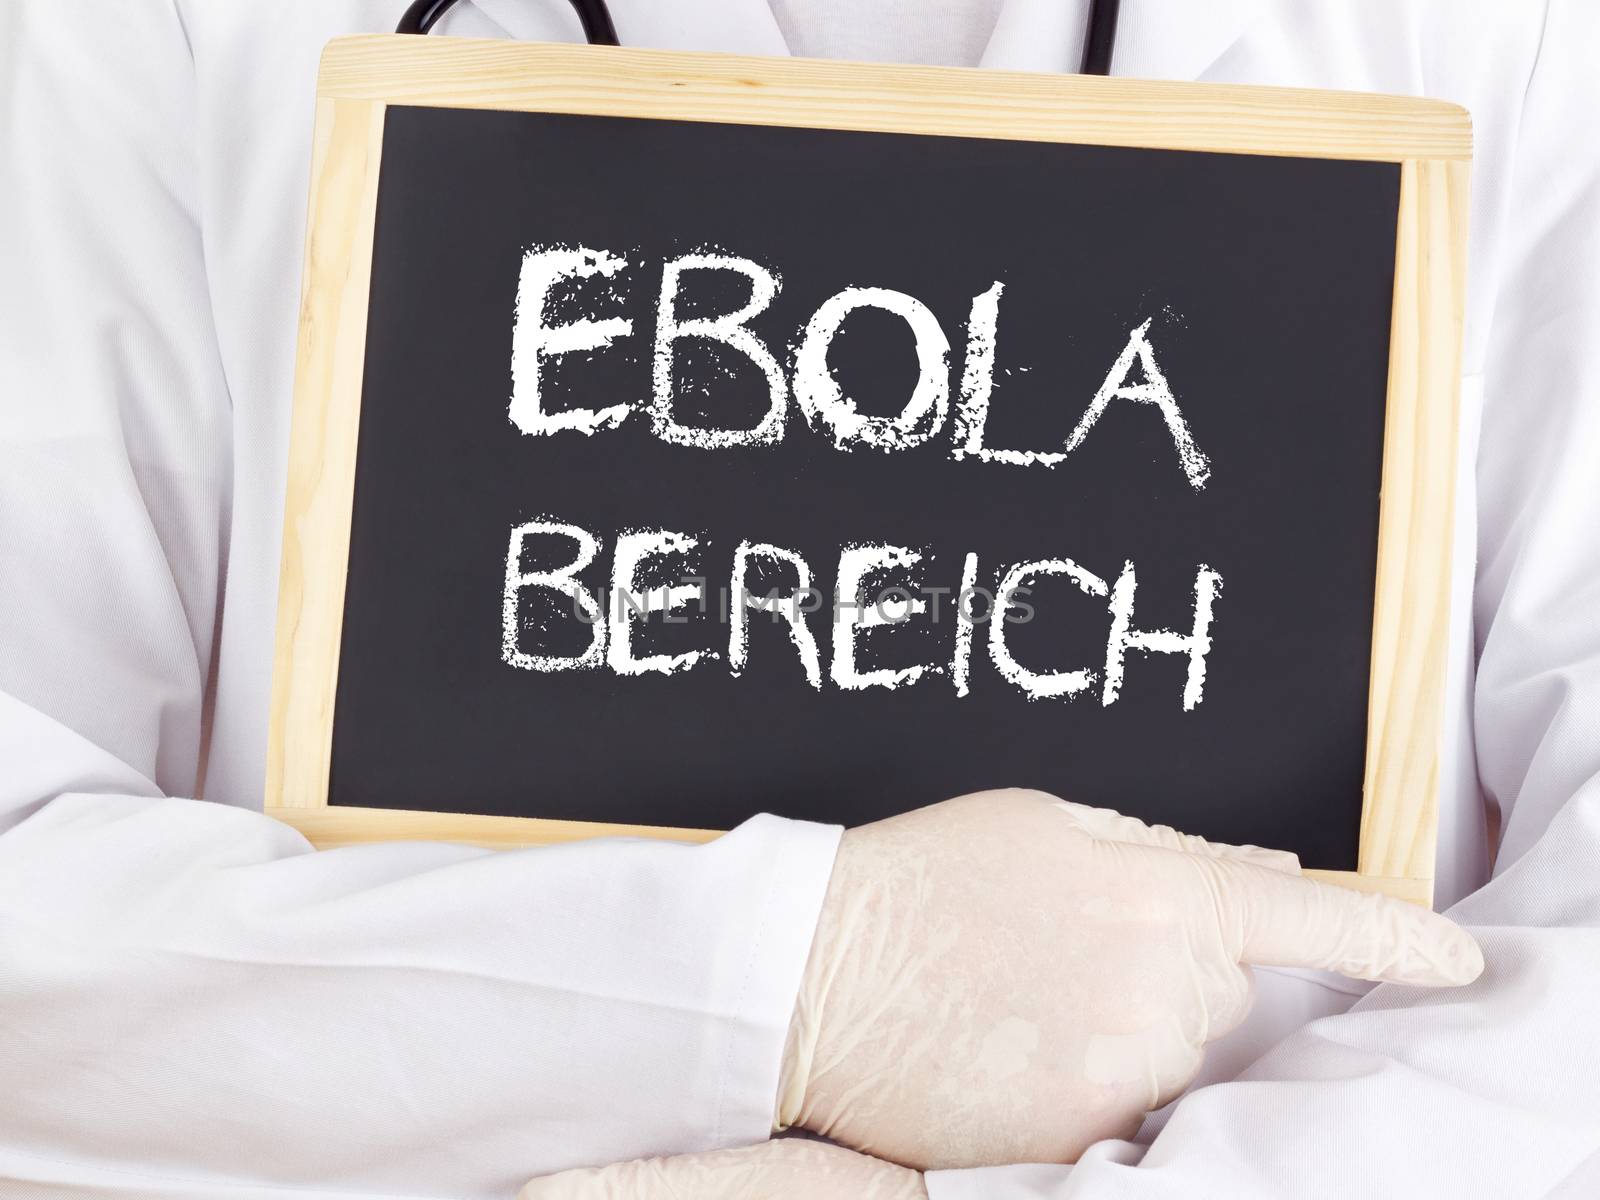 Doctor shows information: Ebola area in german language